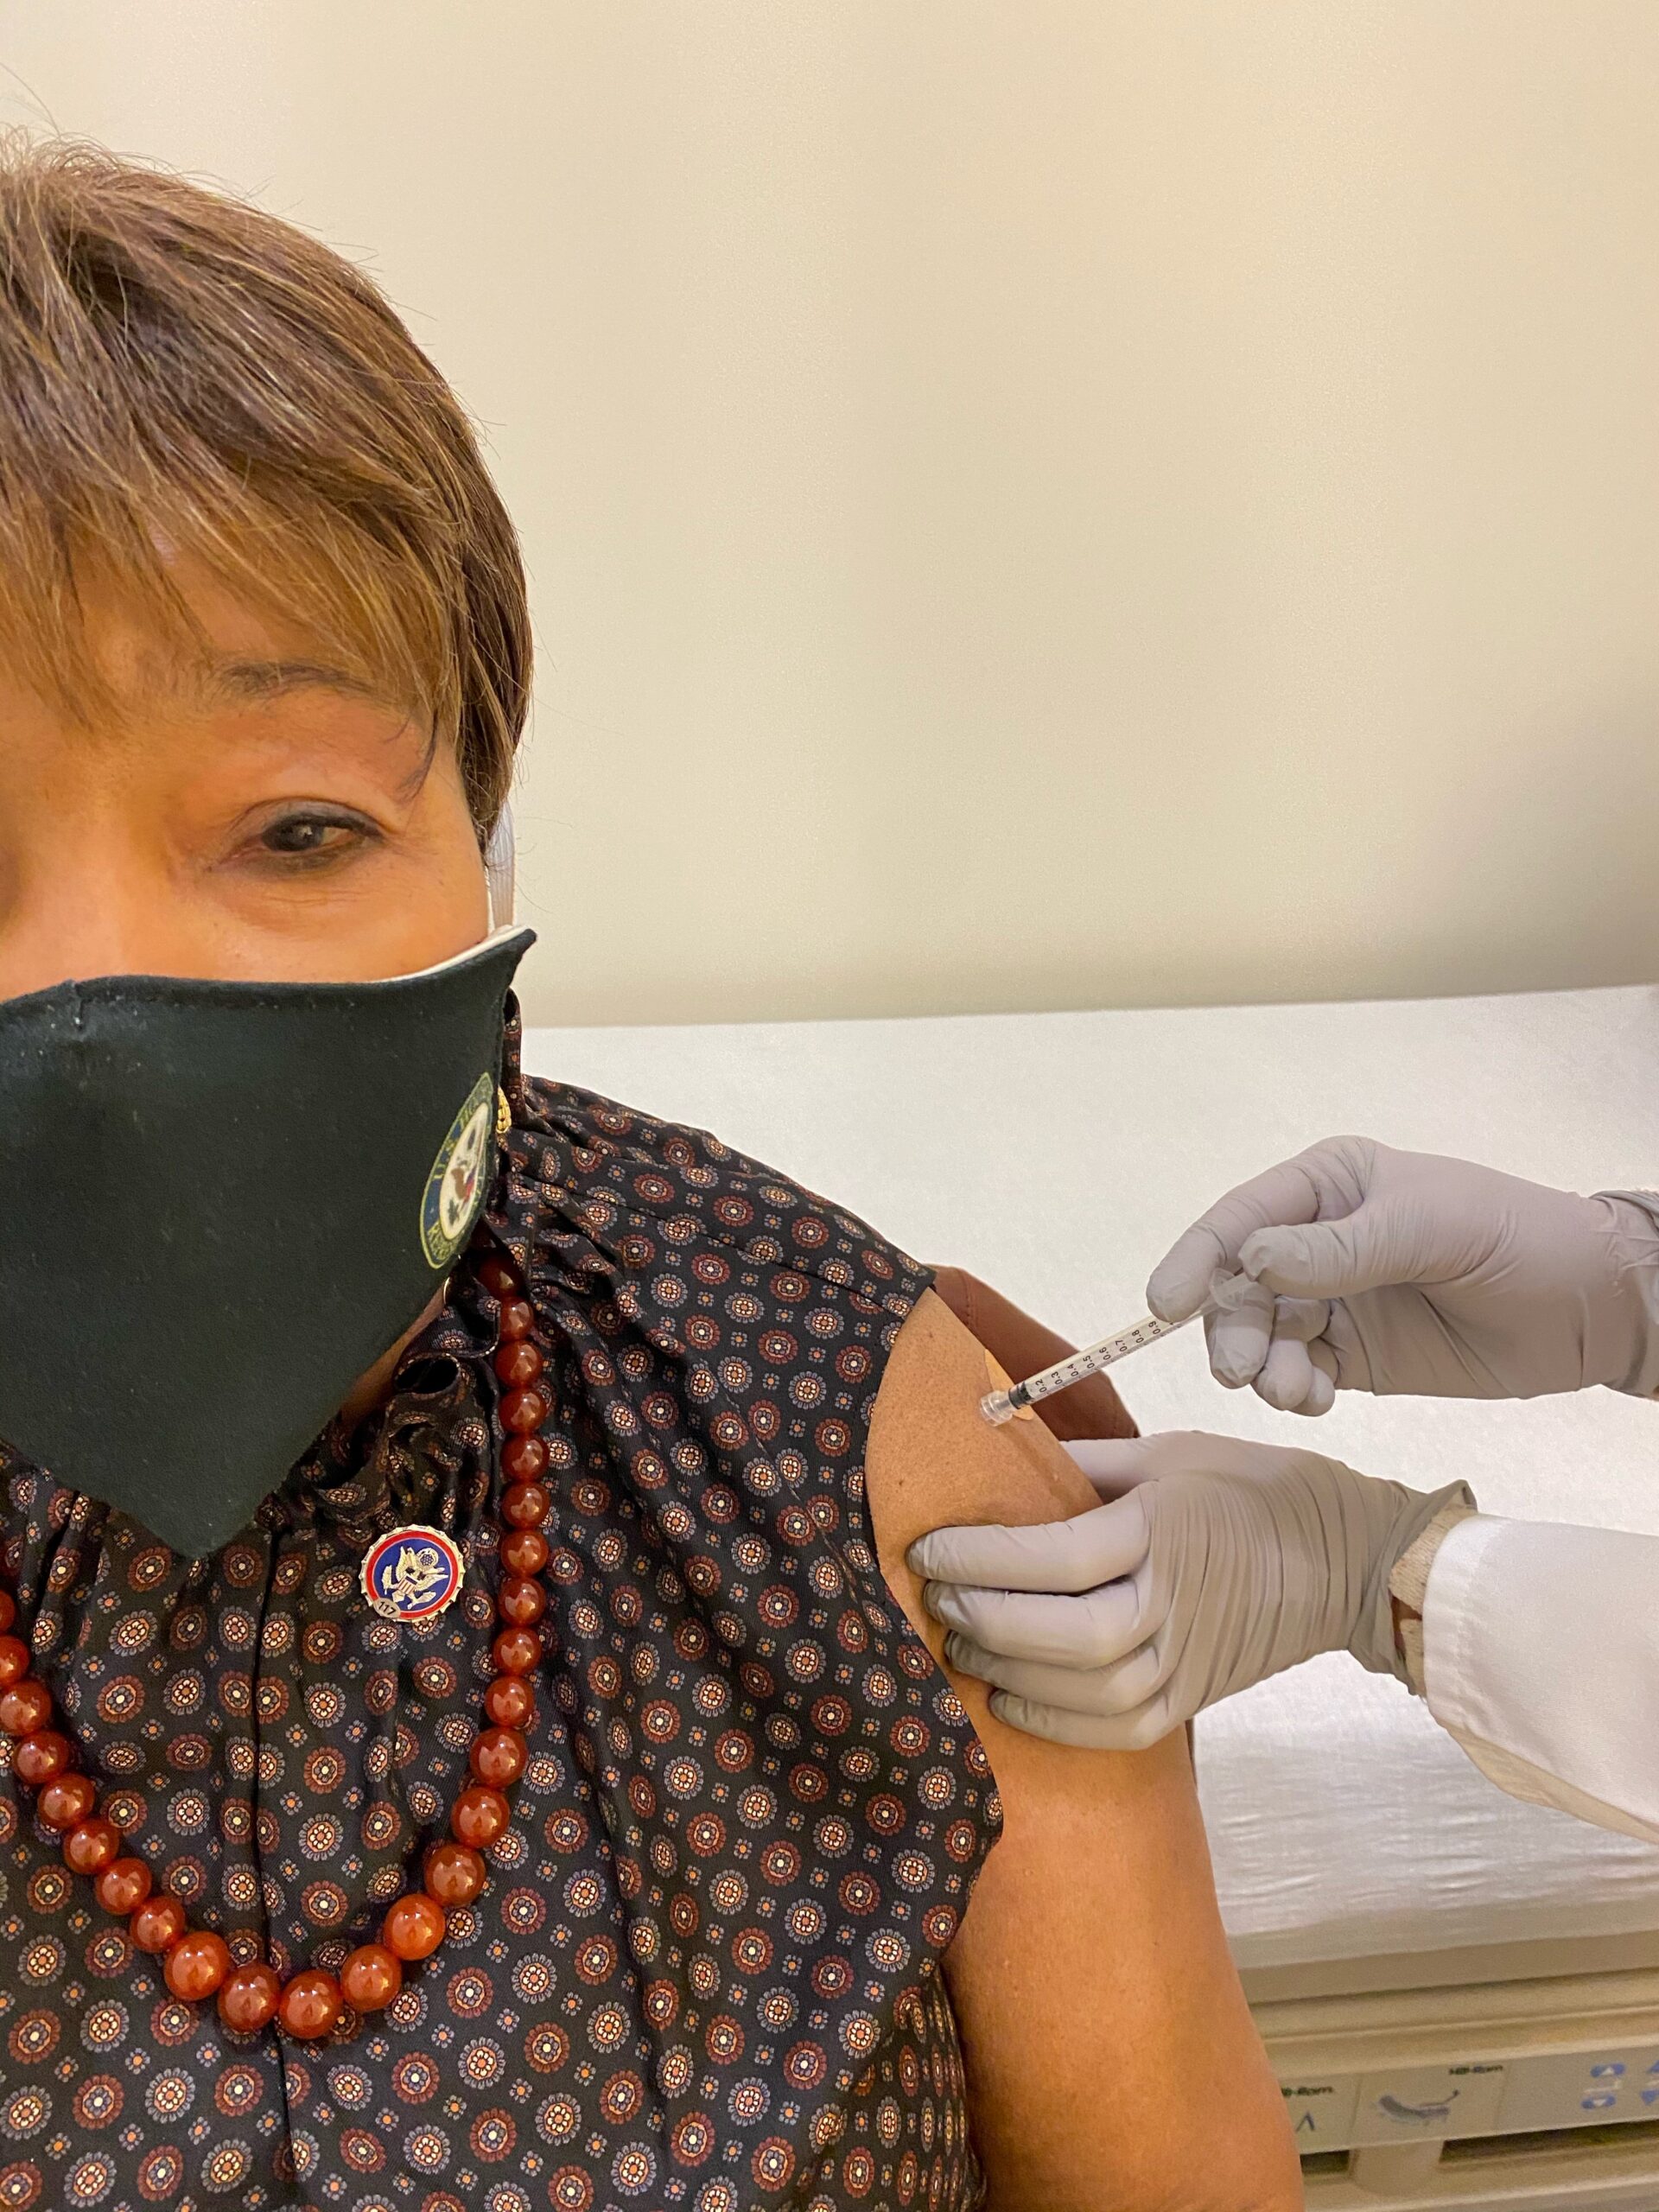 Congresswoman Johnson Receives First Dose of COVID-19 Vaccine